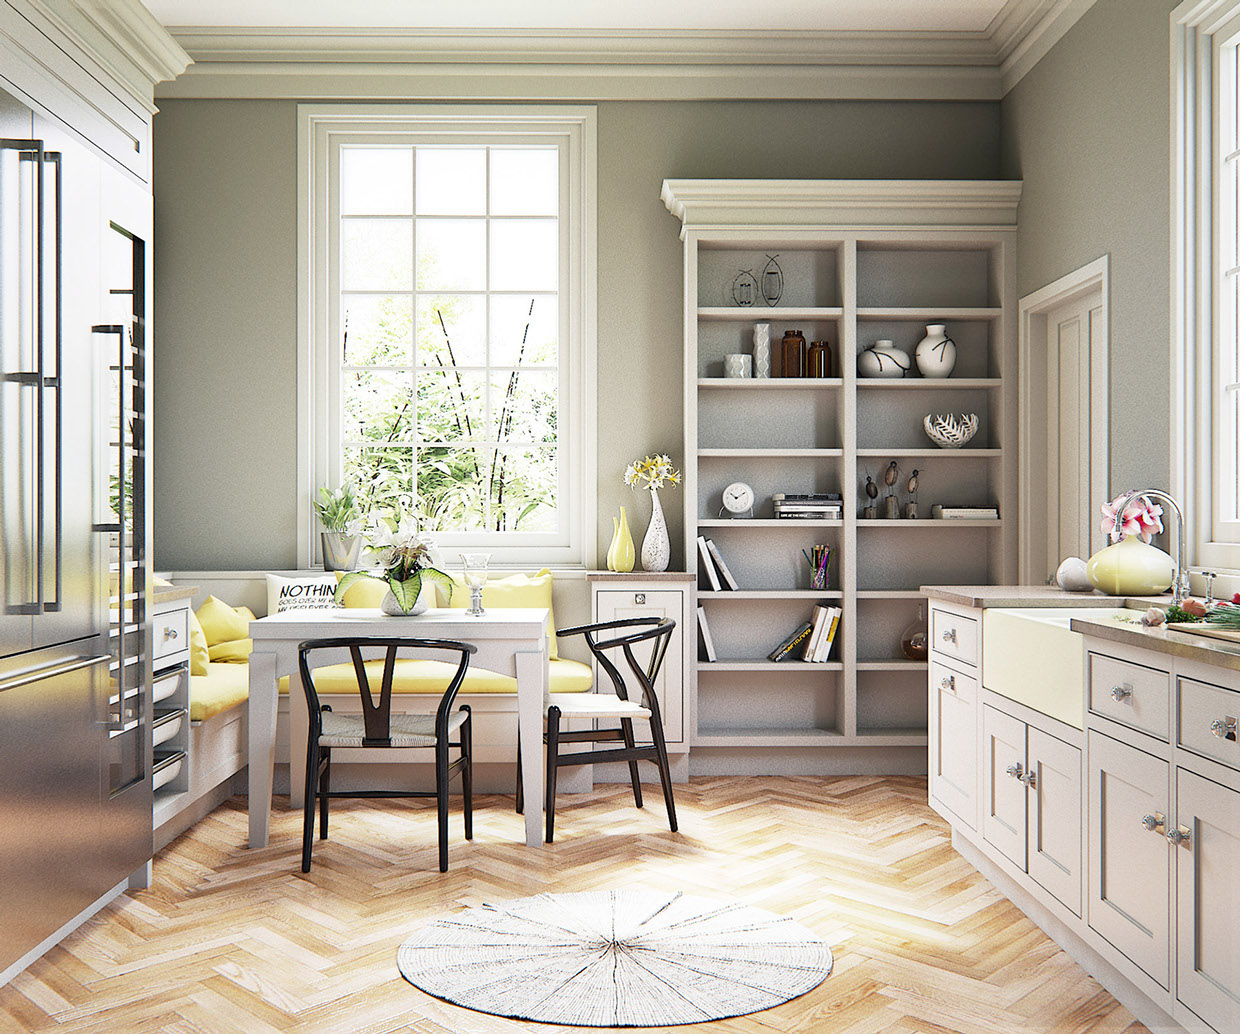 Scandinavian kitchen design "width =" 1240 "height =" 1034 "srcset =" https://mileray.com/wp-content/uploads/2020/05/1588512336_859_Beautiful-Dining-Room-Designs-Completing-Your-Kitchen-That-Add-a.png 1240w, https : //mileray.com/wp-content/uploads/2017/06/Scandinavian-kitchen-design-Image-Box-Studio-300x250.png 300w, https://mileray.com/wp-content/uploads/2017 / 06 / Scandinavian-kitchen-design-Box-Studio-768x640.png 768w, https://mileray.com/wp-content/uploads/2017/06/Scandinavian-kitchen-design-Image-Box-Studio- 1024x854 .png 1024w, https://mileray.com/wp-content/uploads/2017/06/Scandinavian-kitchen-design-Image-Box-Studio-696x580.png 696w, https://mileray.com/wp- content / uploads / 2017/06 / Scandinavian-kitchen-design-Image-Box-Studio-1068x891.png 1068w, https://mileray.com/wp-content/uploads/2017/06/Scandinavian-kitchen-design-Image - Box-Studio-504x420.png 504w "Sizes =" (maximum width: 1240px) 100vw, 1240px